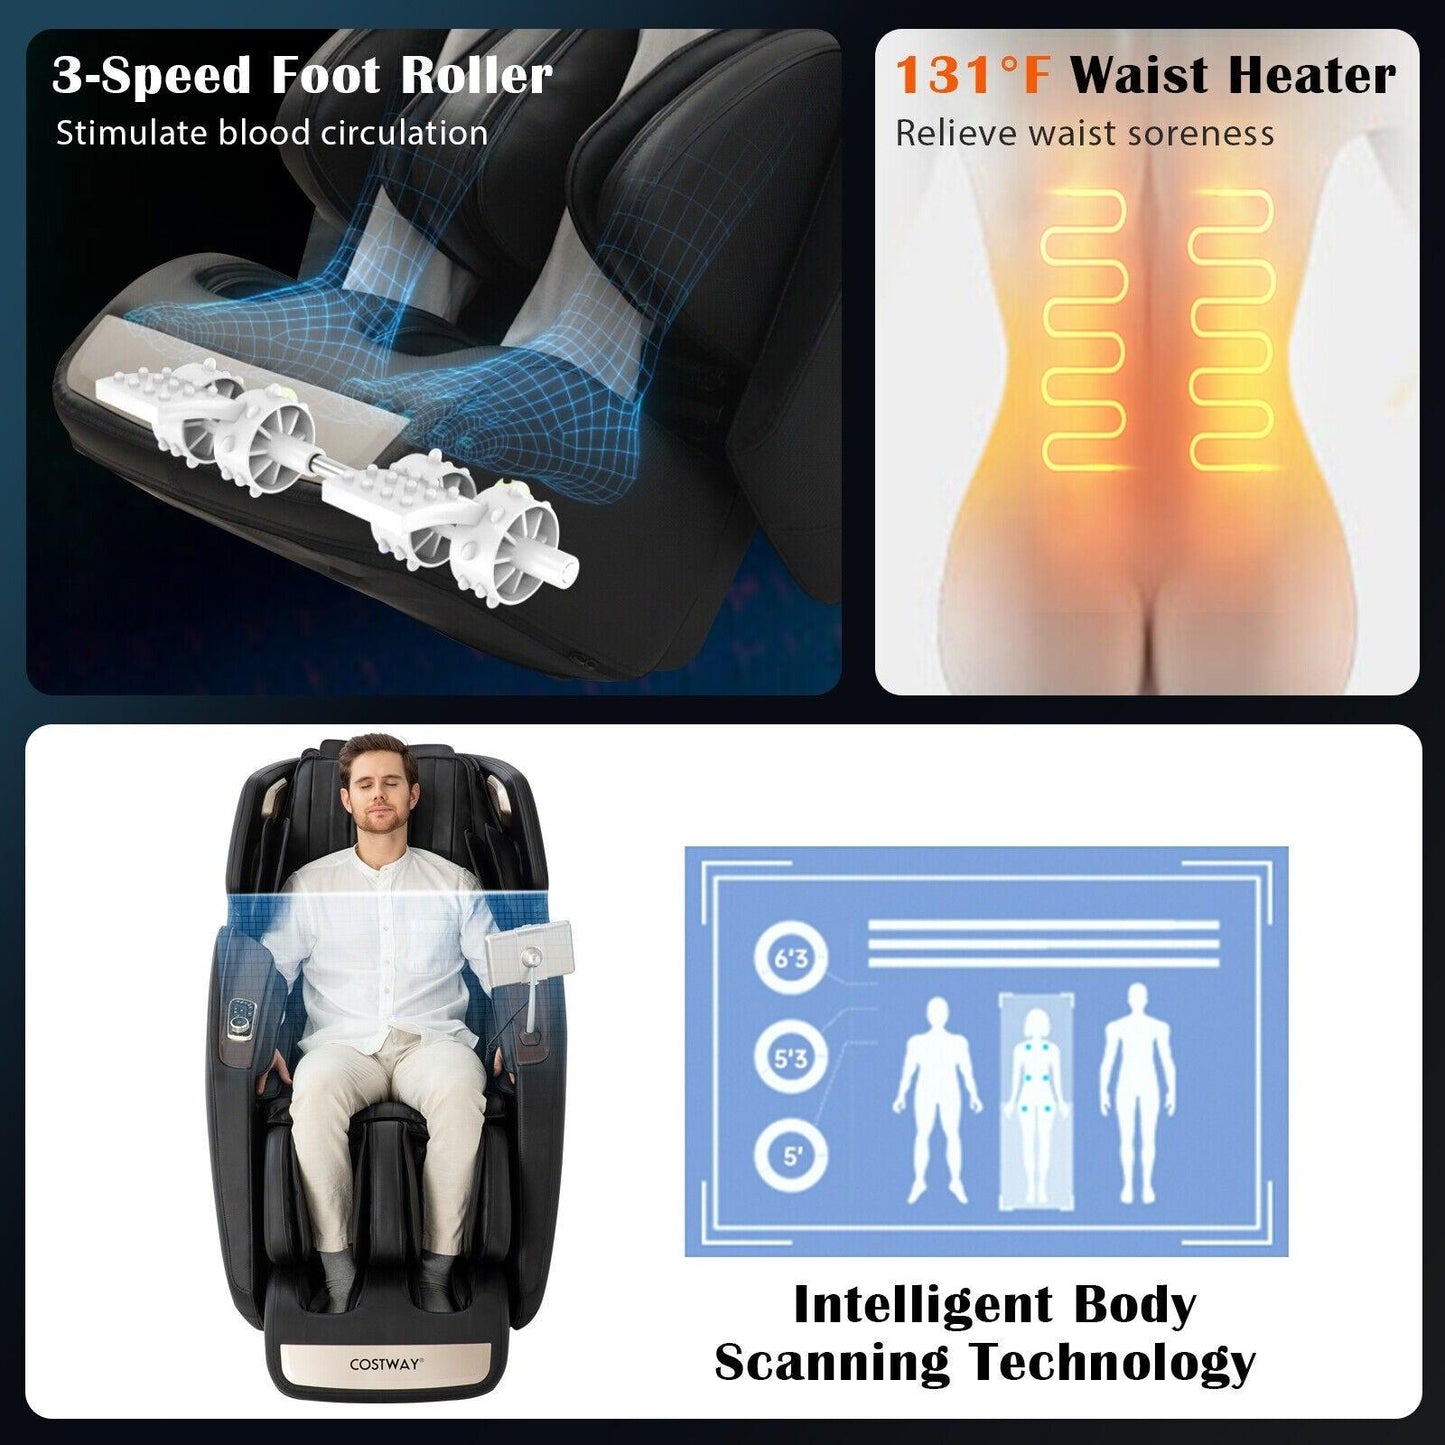 3D Massage Chair JL10013, SL-Track Full Body Zero Gravity with Thai Stretch - YOURISHOP.COM